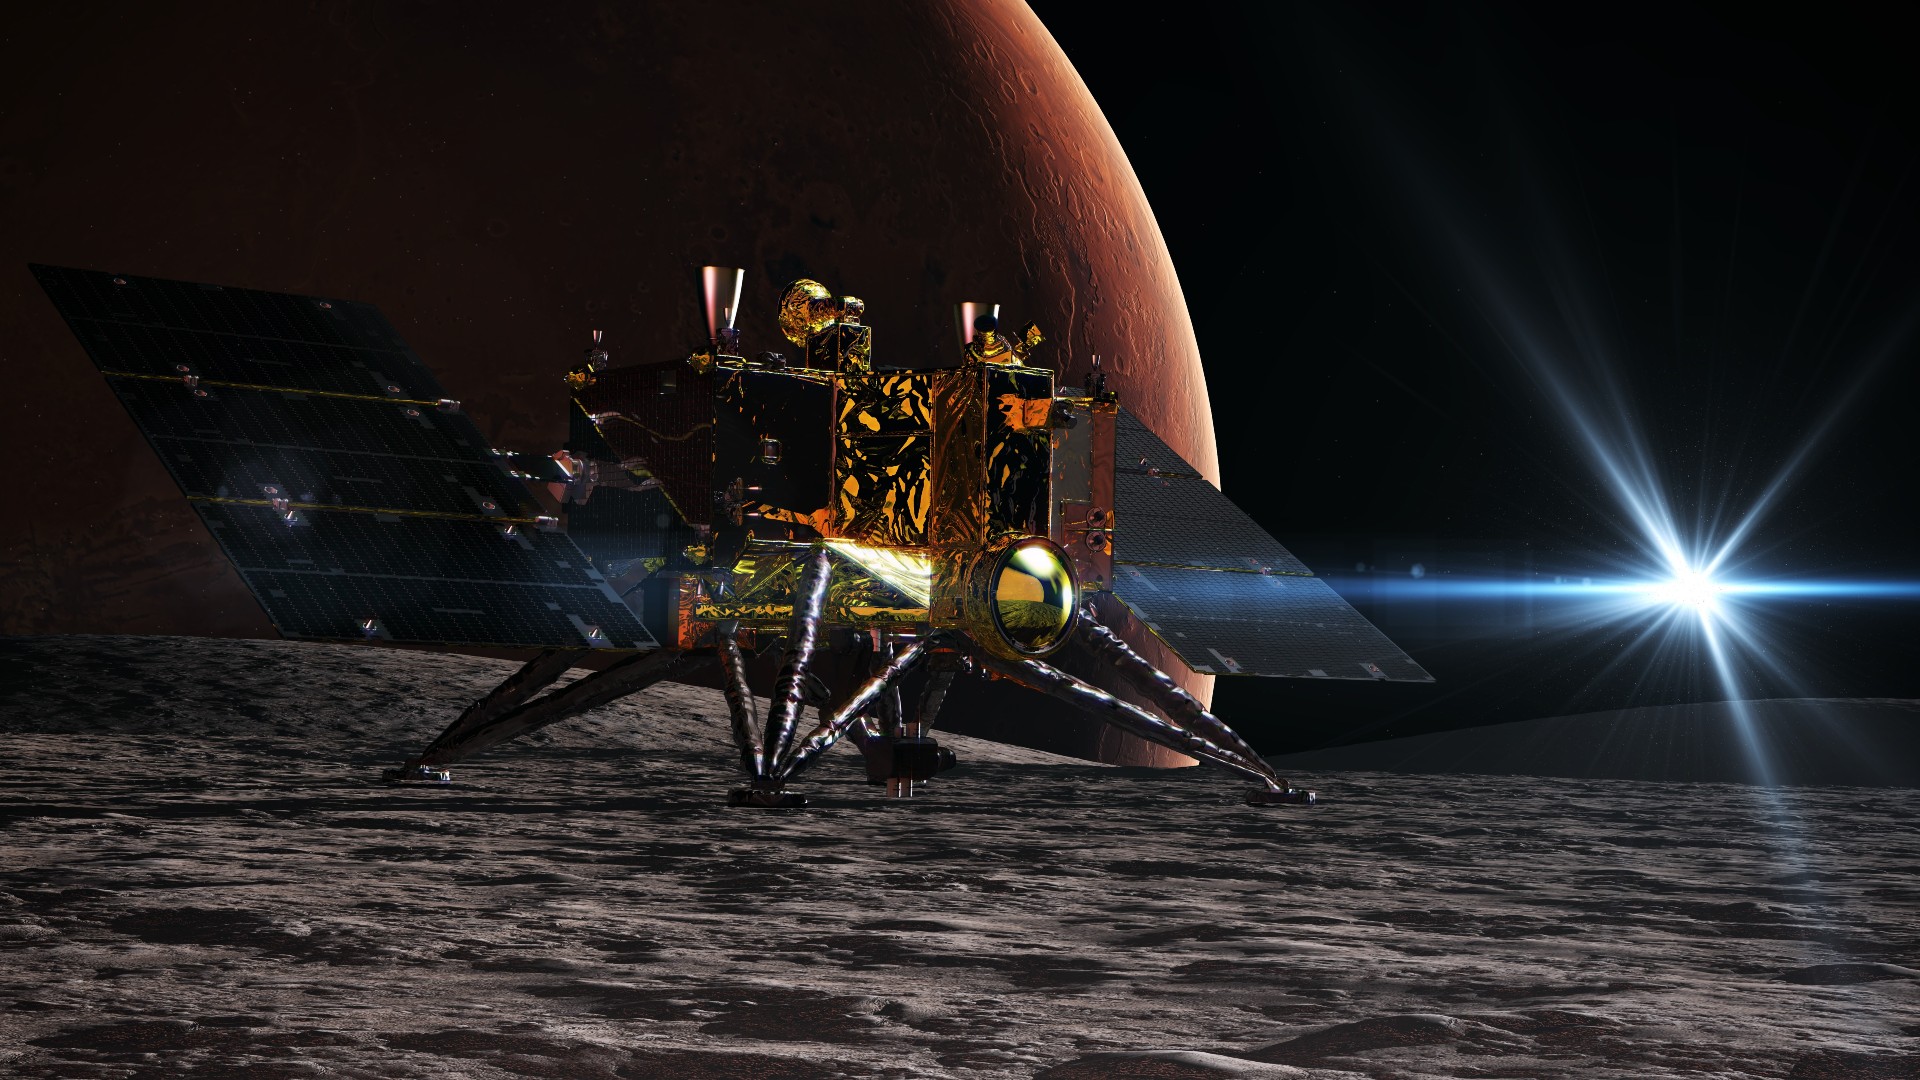 Japan may delay its Mars moon sampling mission MMX due to rocket problems